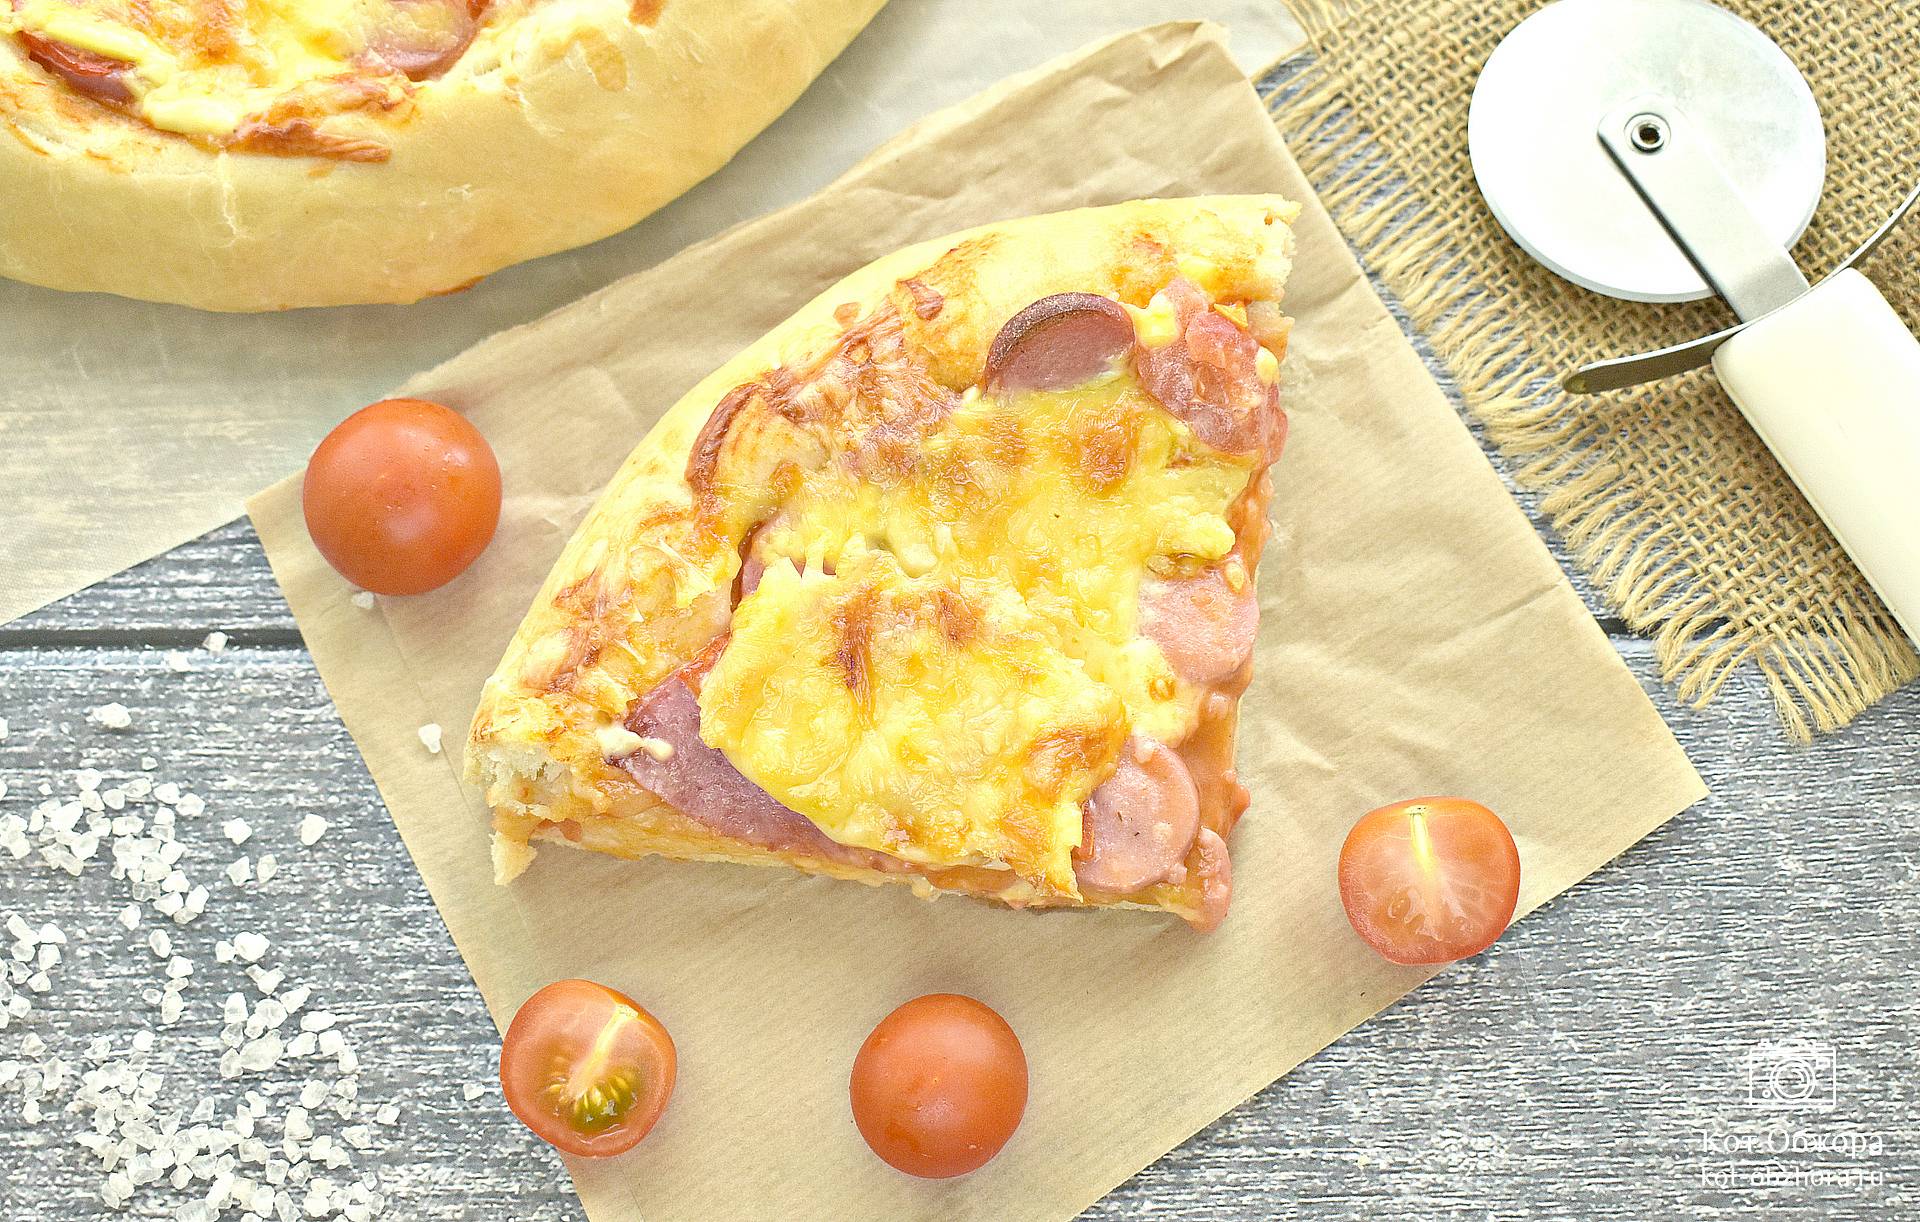 Пицца на слоено-дрожжевом тесте — рецепт с фото пошагово